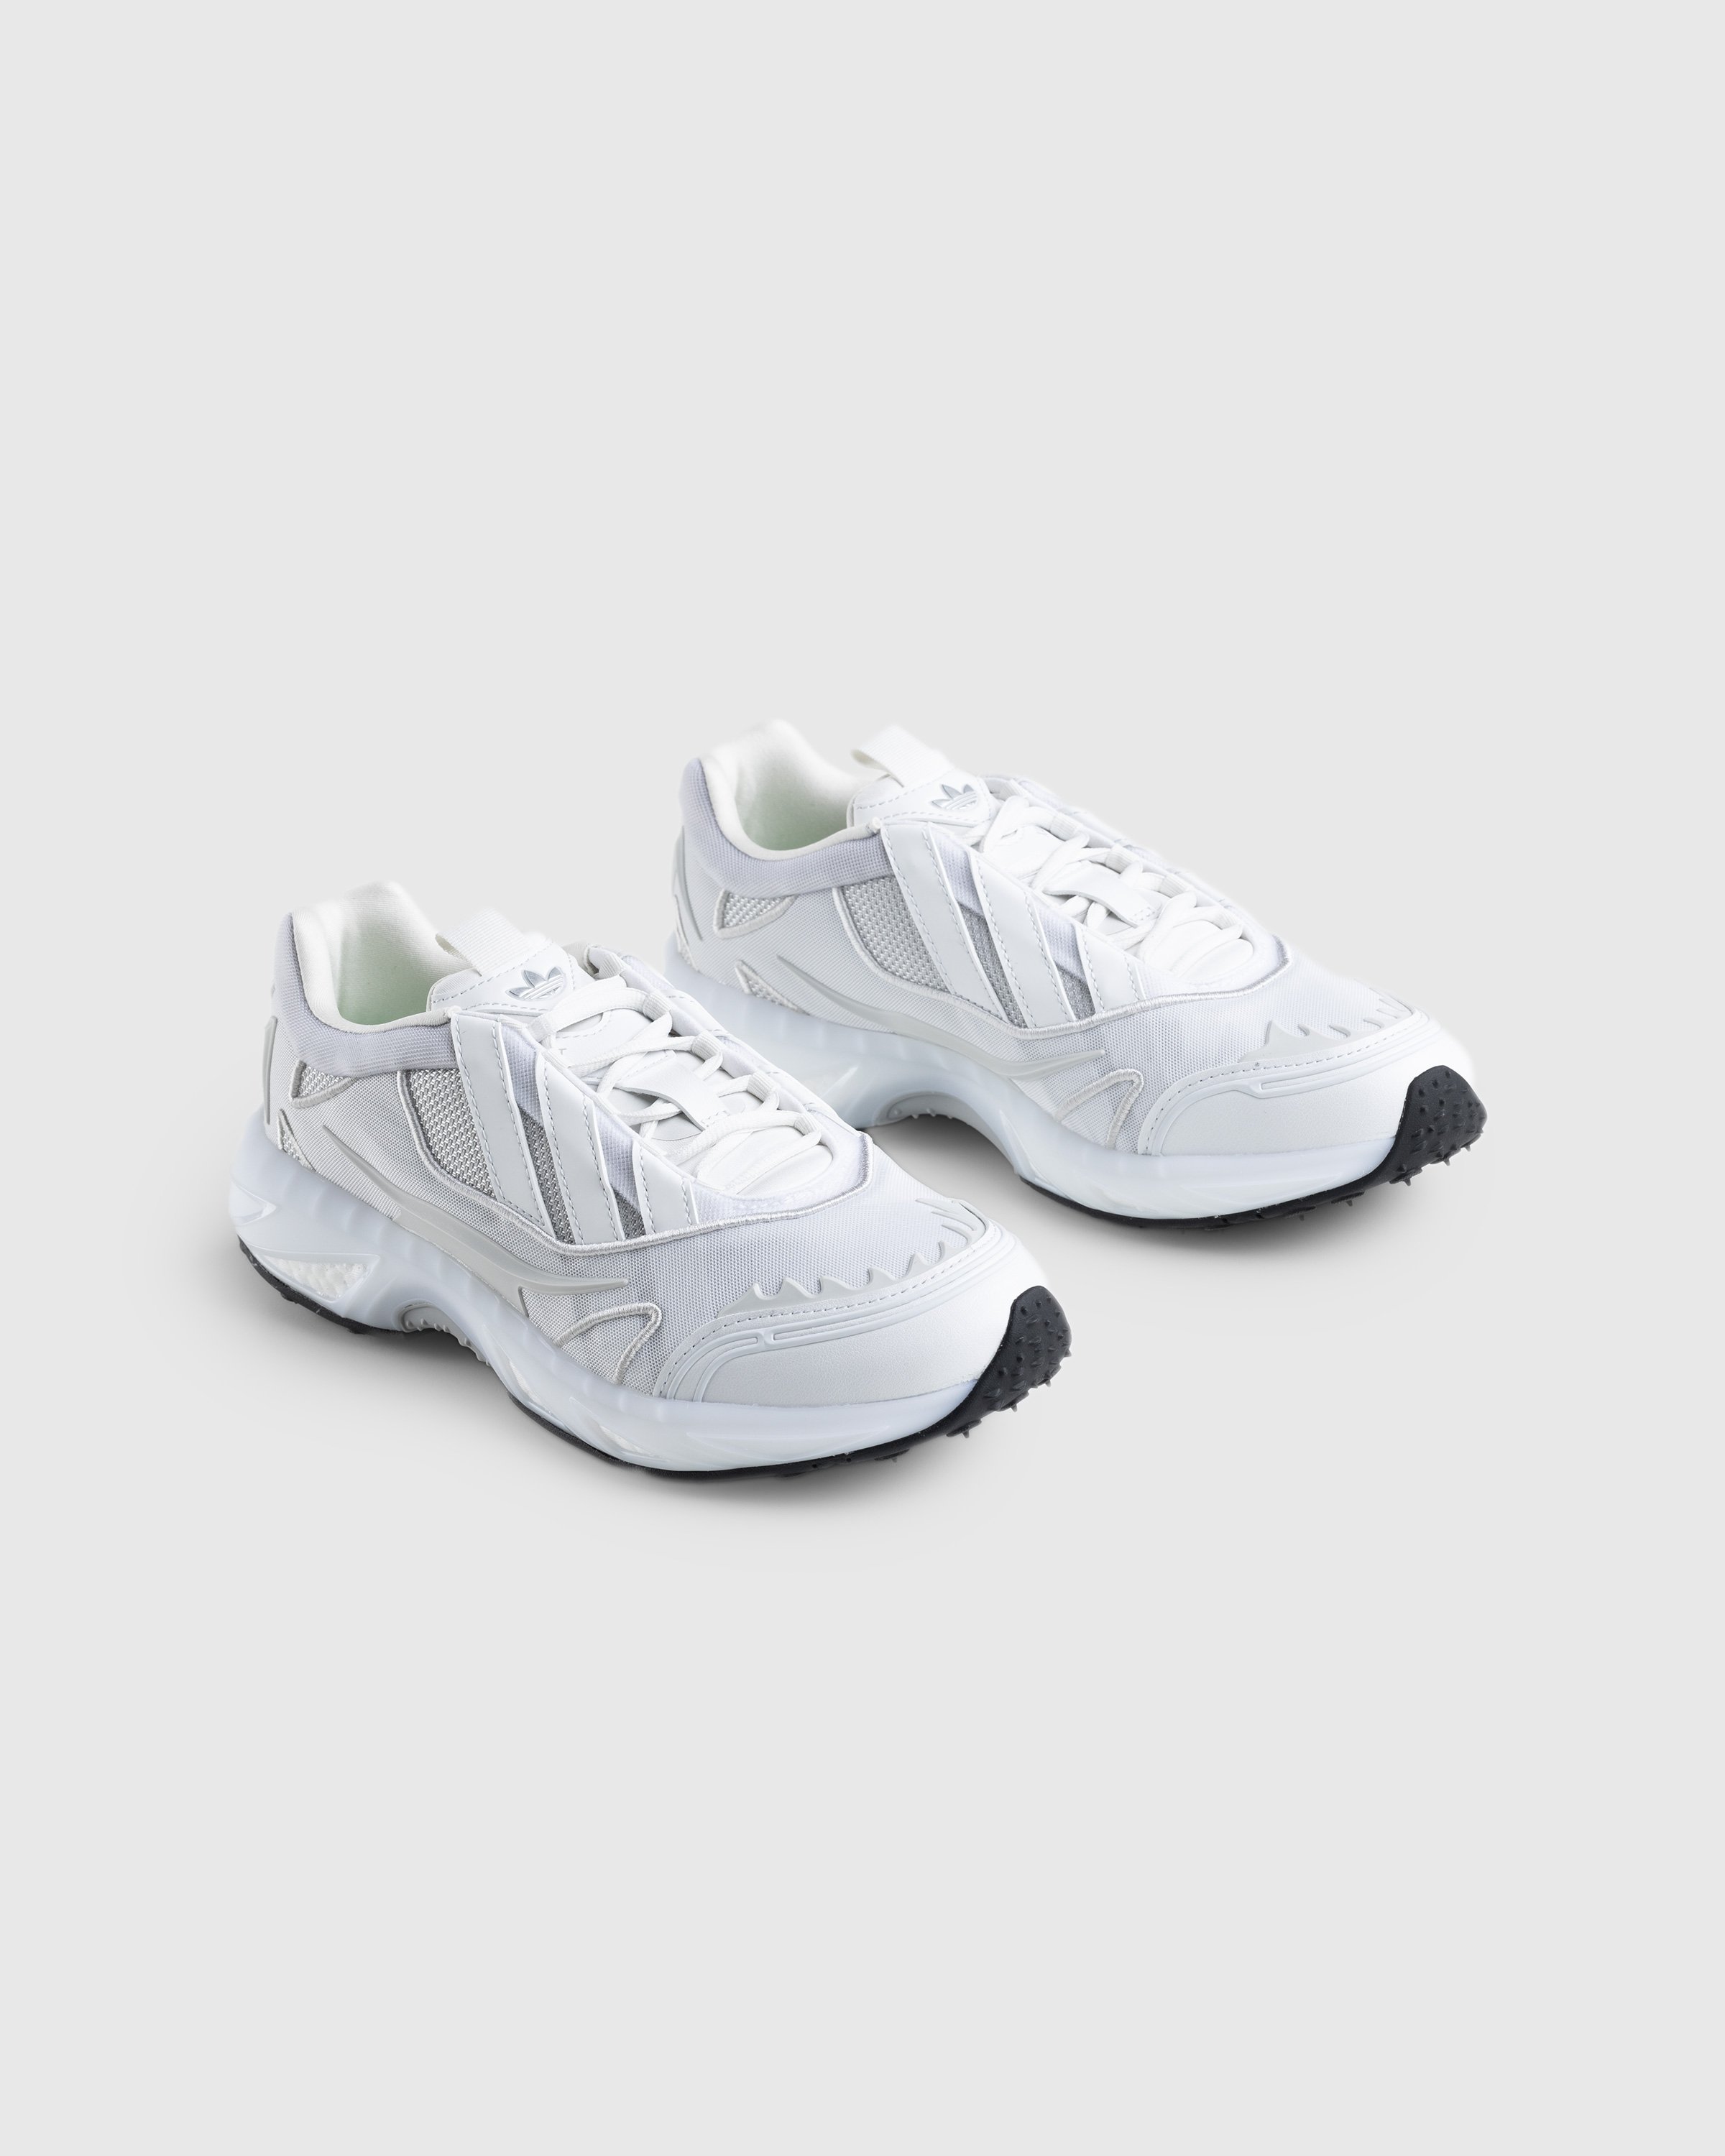 Adidas - Xare Boost White - Footwear - White - Image 3